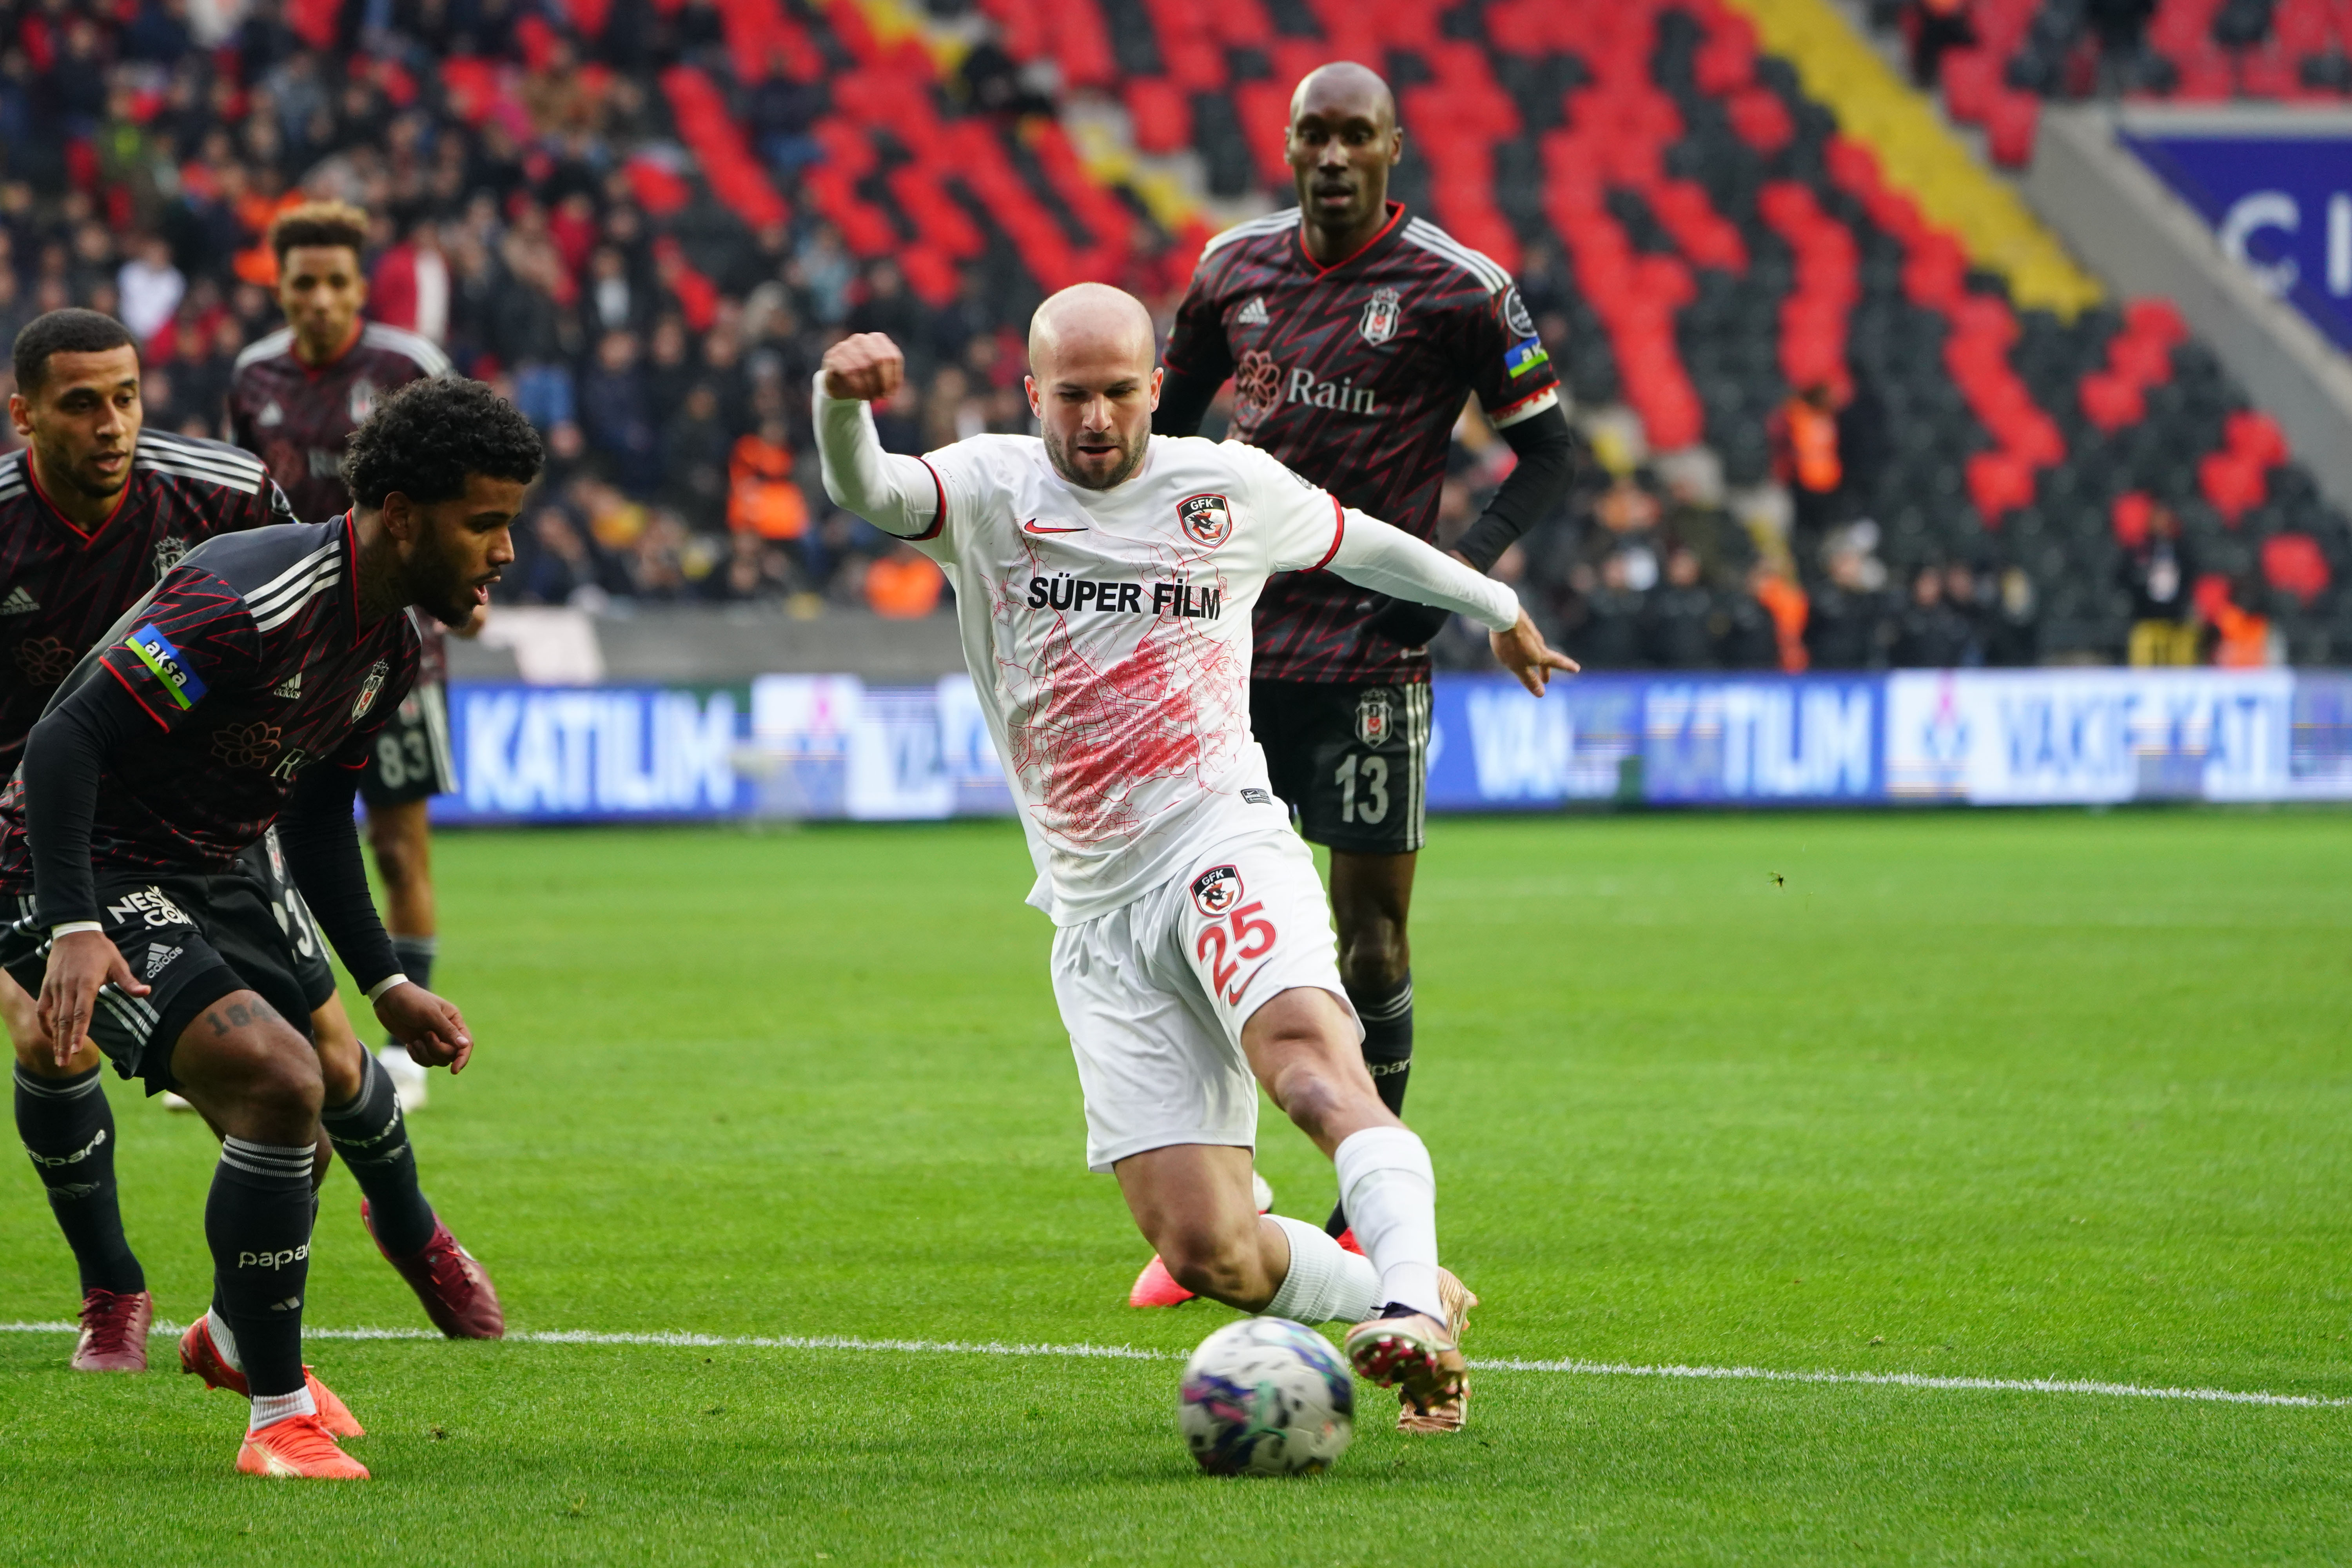 Beşiktaş-Gaziantep: 2-1